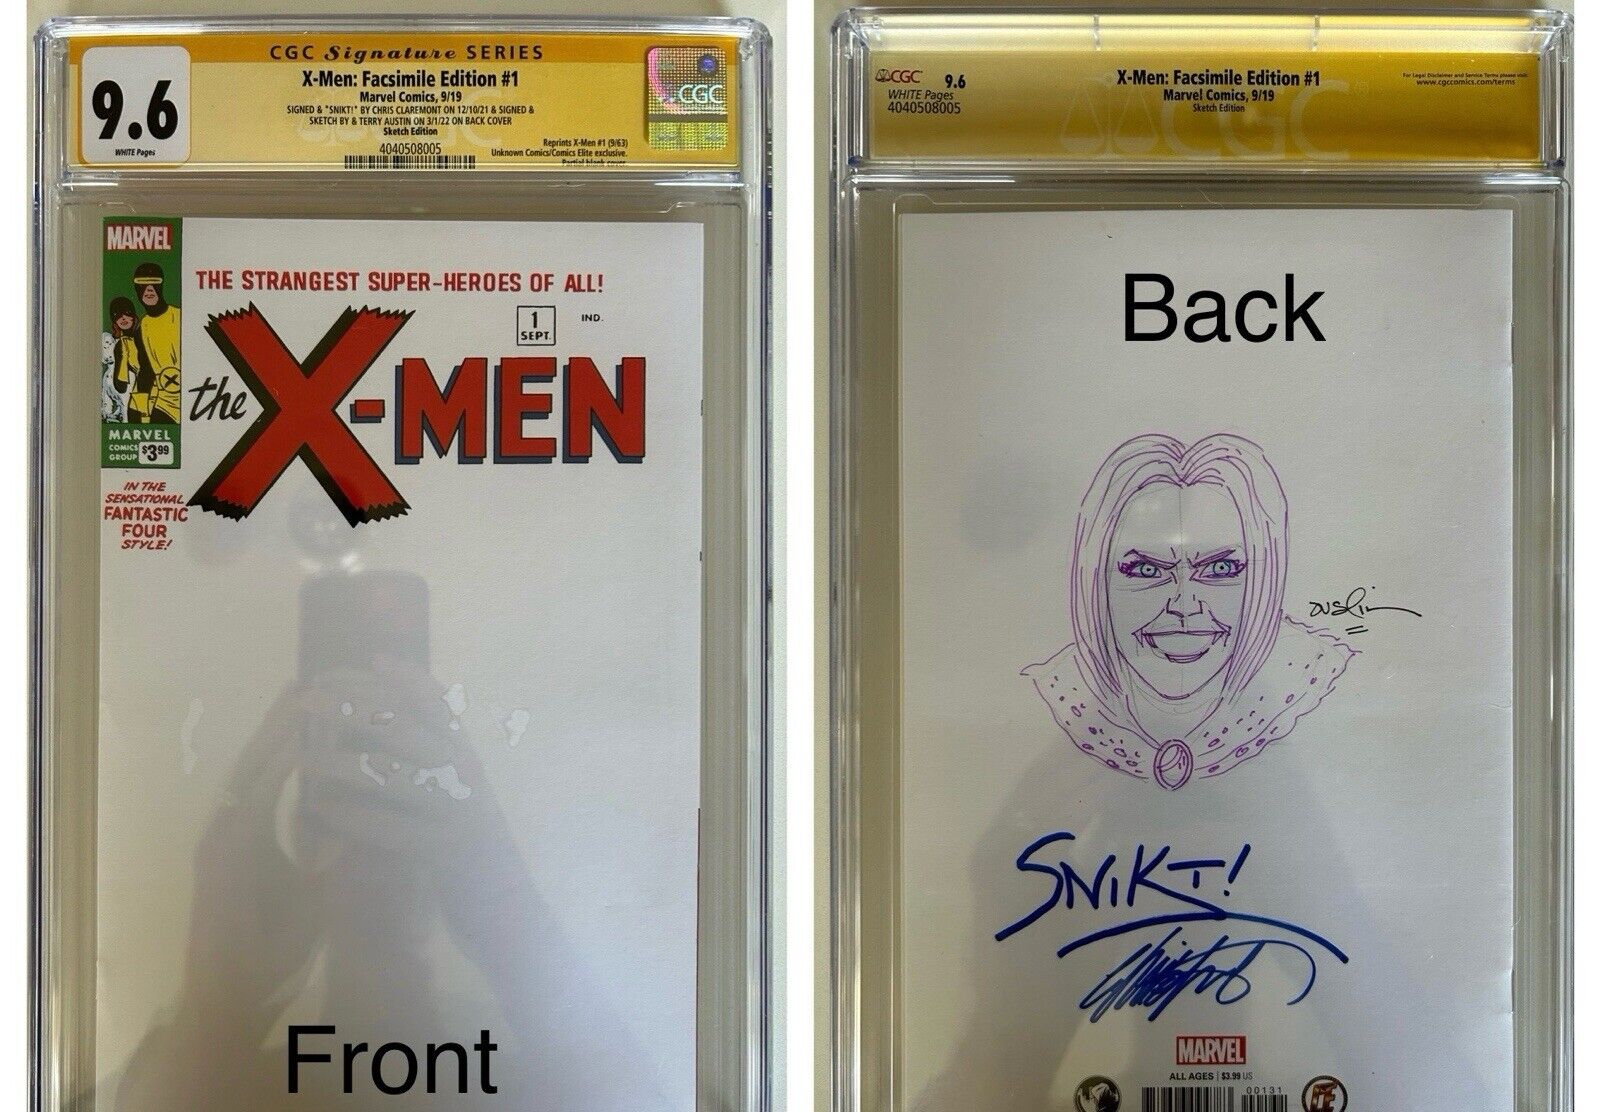 CGC 9.6 w/ SKETCH: X-Men #1 Facsimile TERRY AUSTIN & CLAREMONT SIGNED & Snikt ss